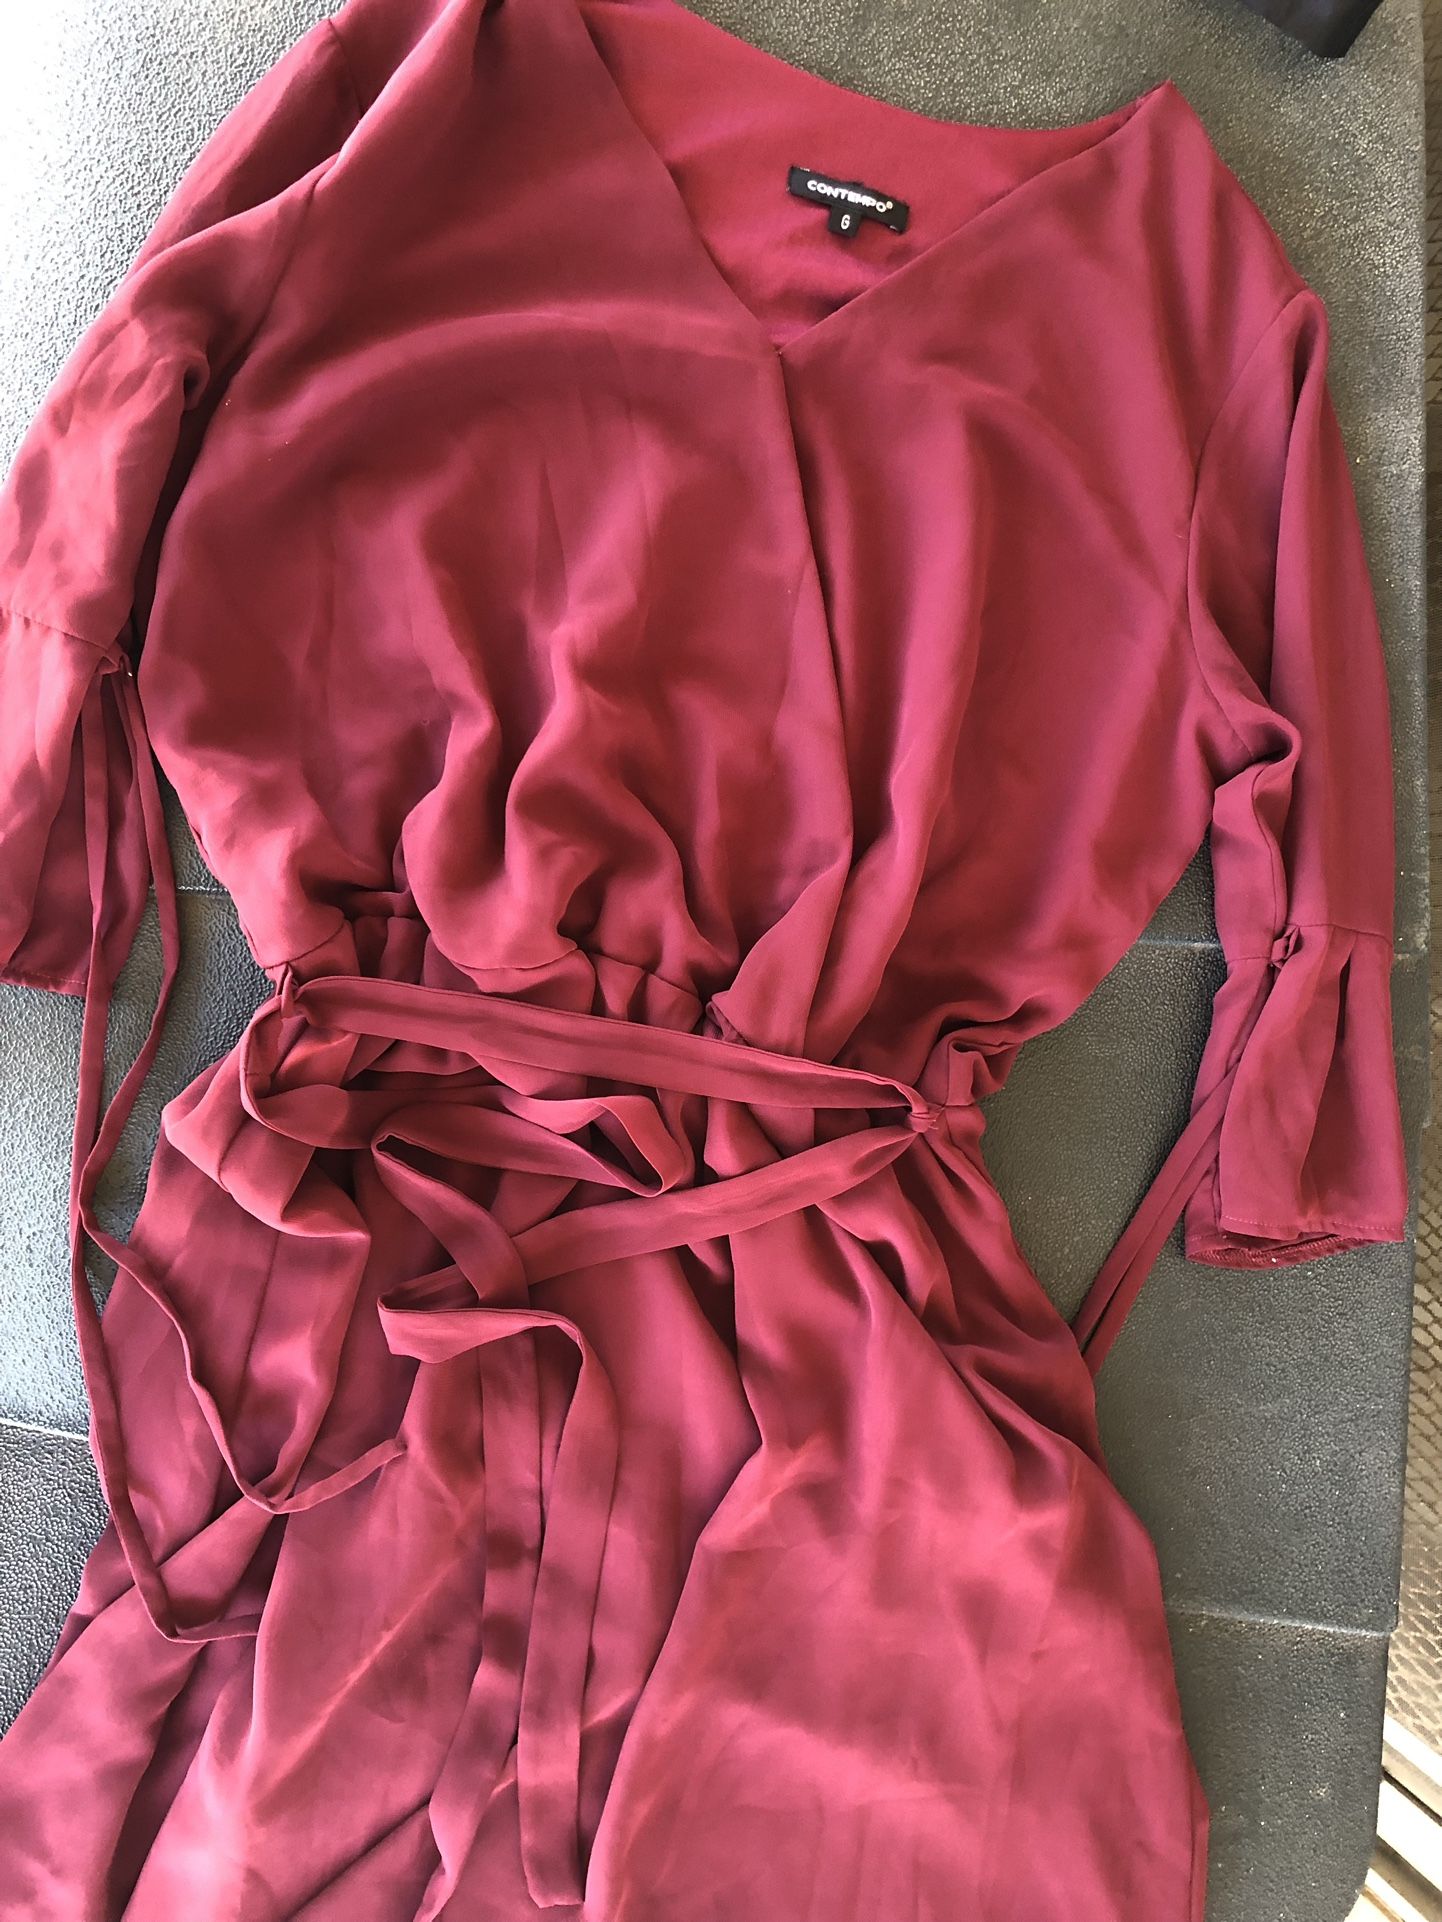 $2 Ladies Red Dress